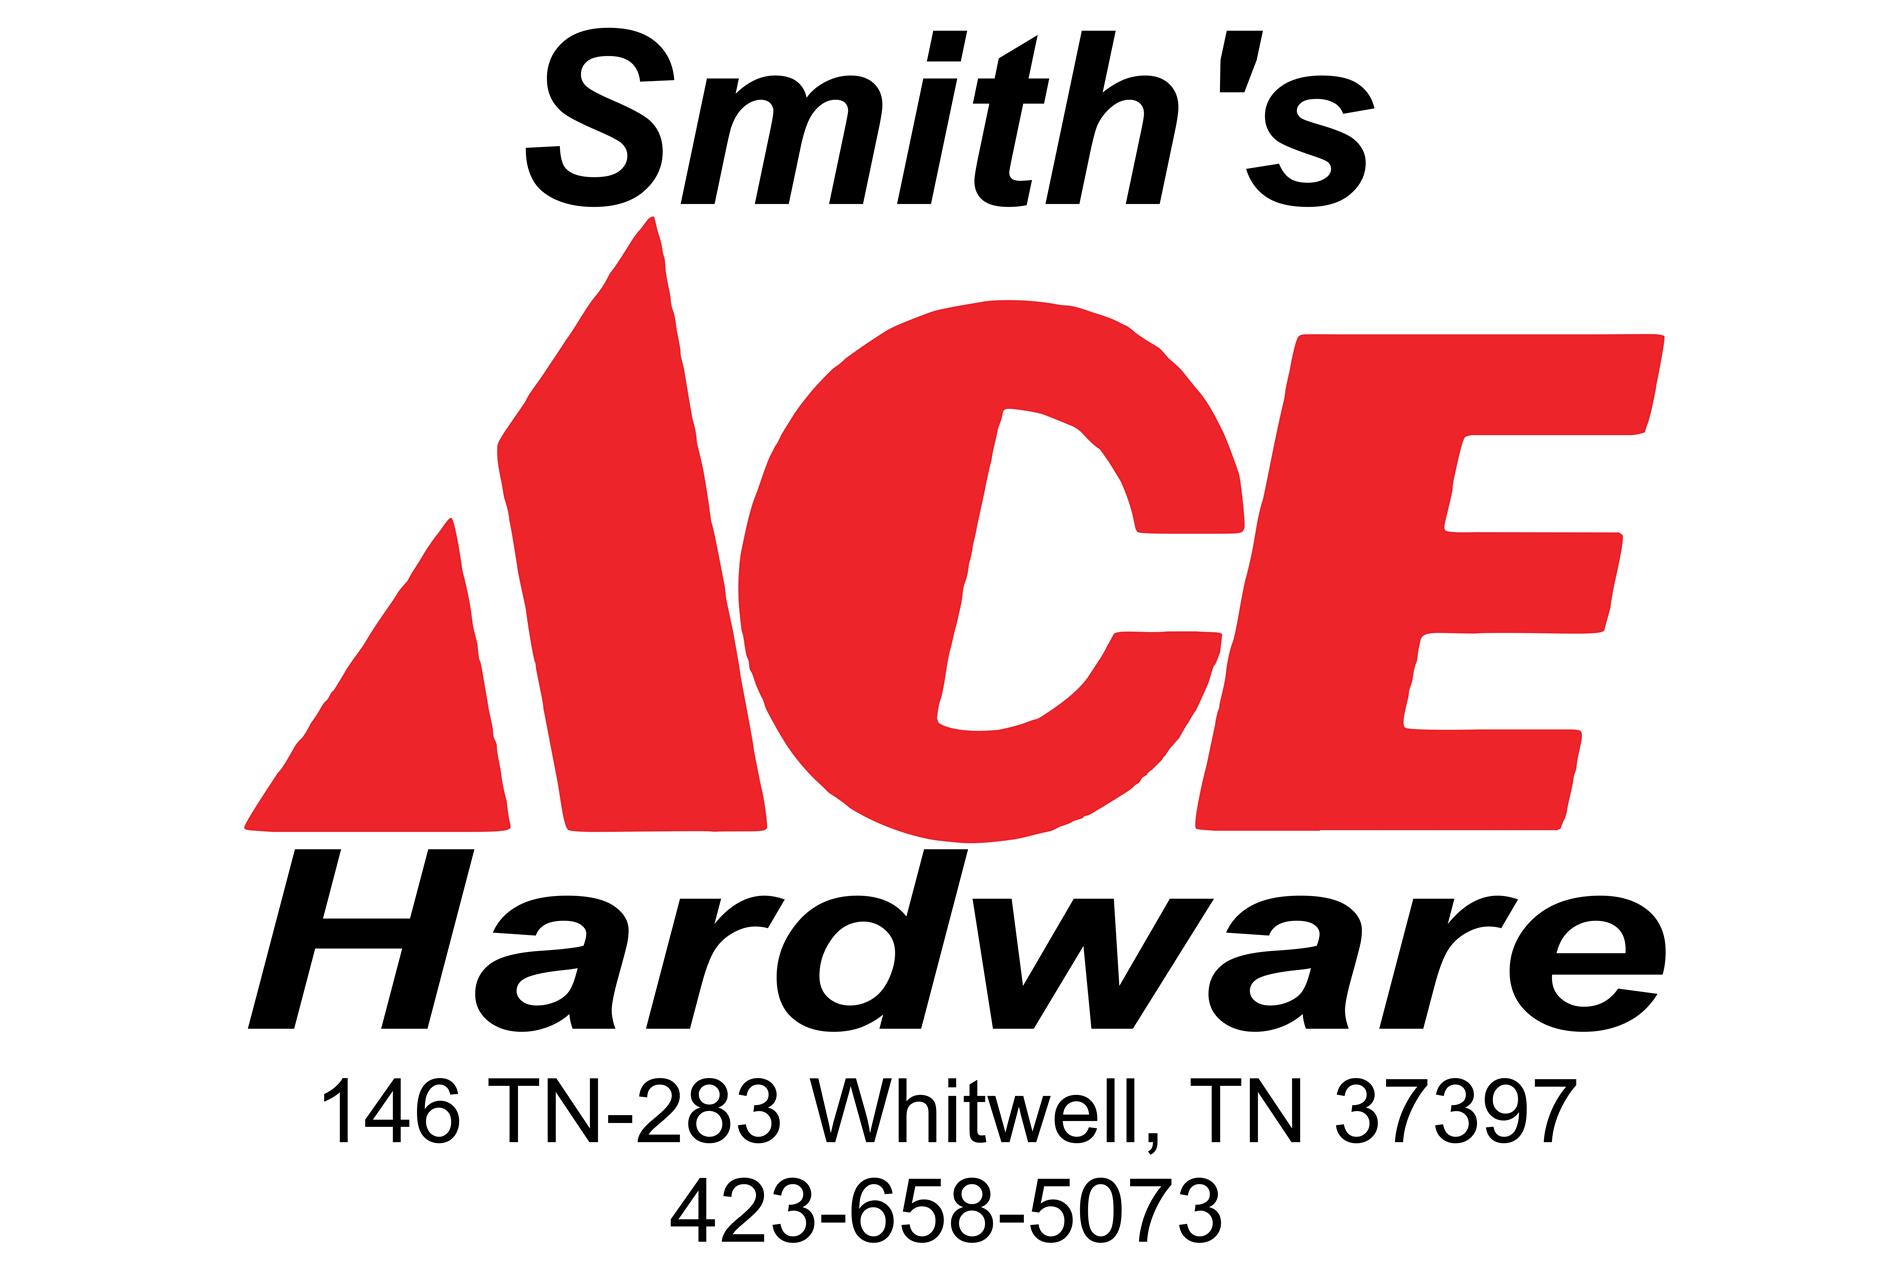 Smith's Ace Hardware